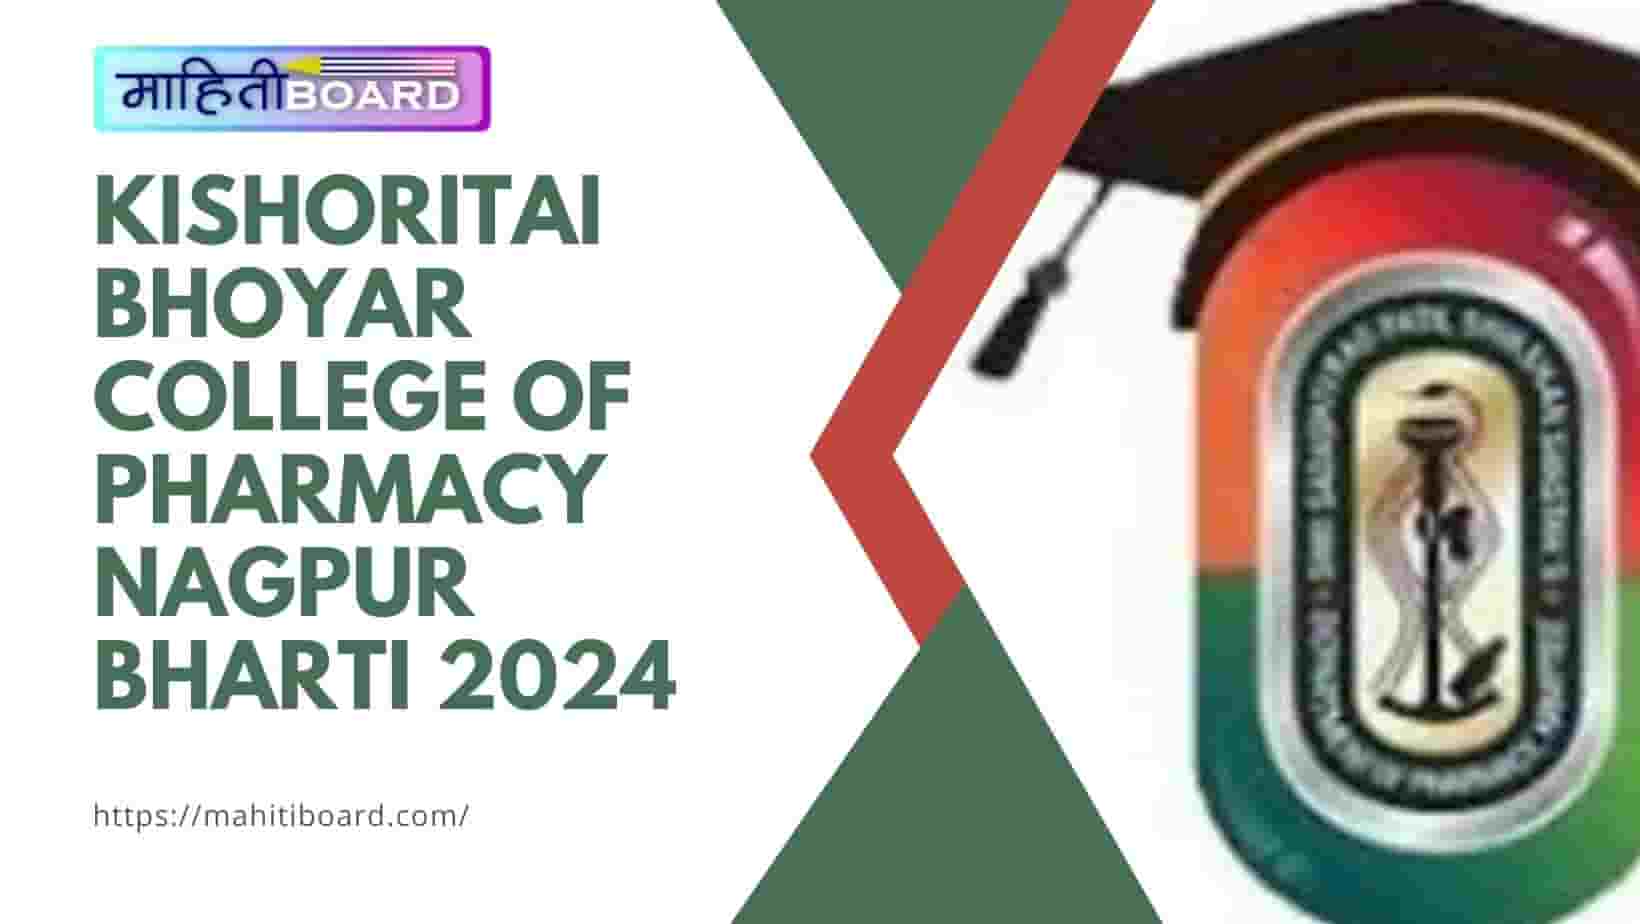 Kishoritai Bhoyar College of Pharmacy Nagpur Bharti 2024